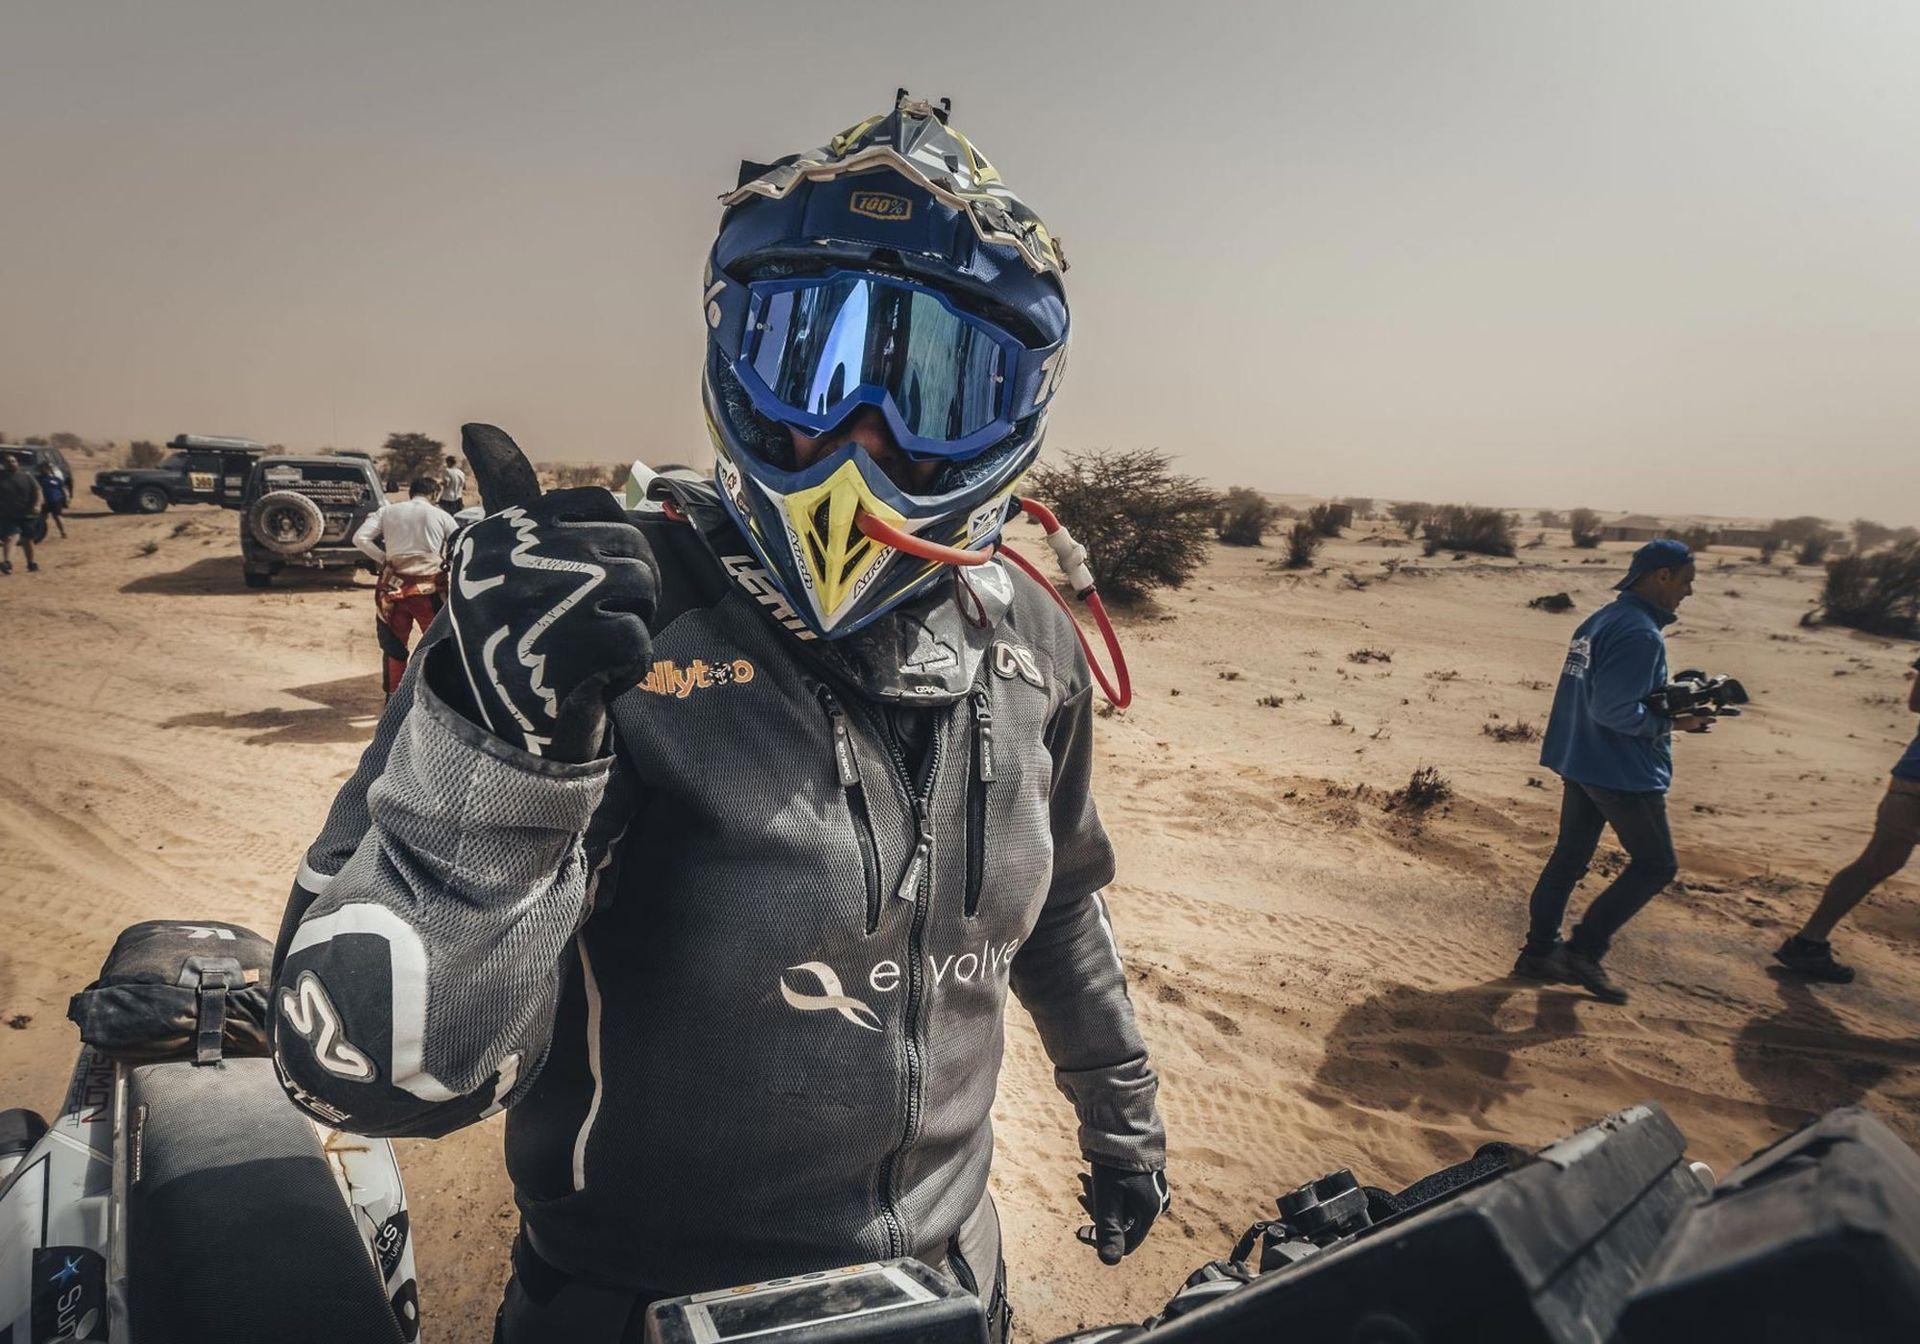 adventure spec Atacama Race Jacket motorcycle motorbike adv biker rider off road layering outdoor gear